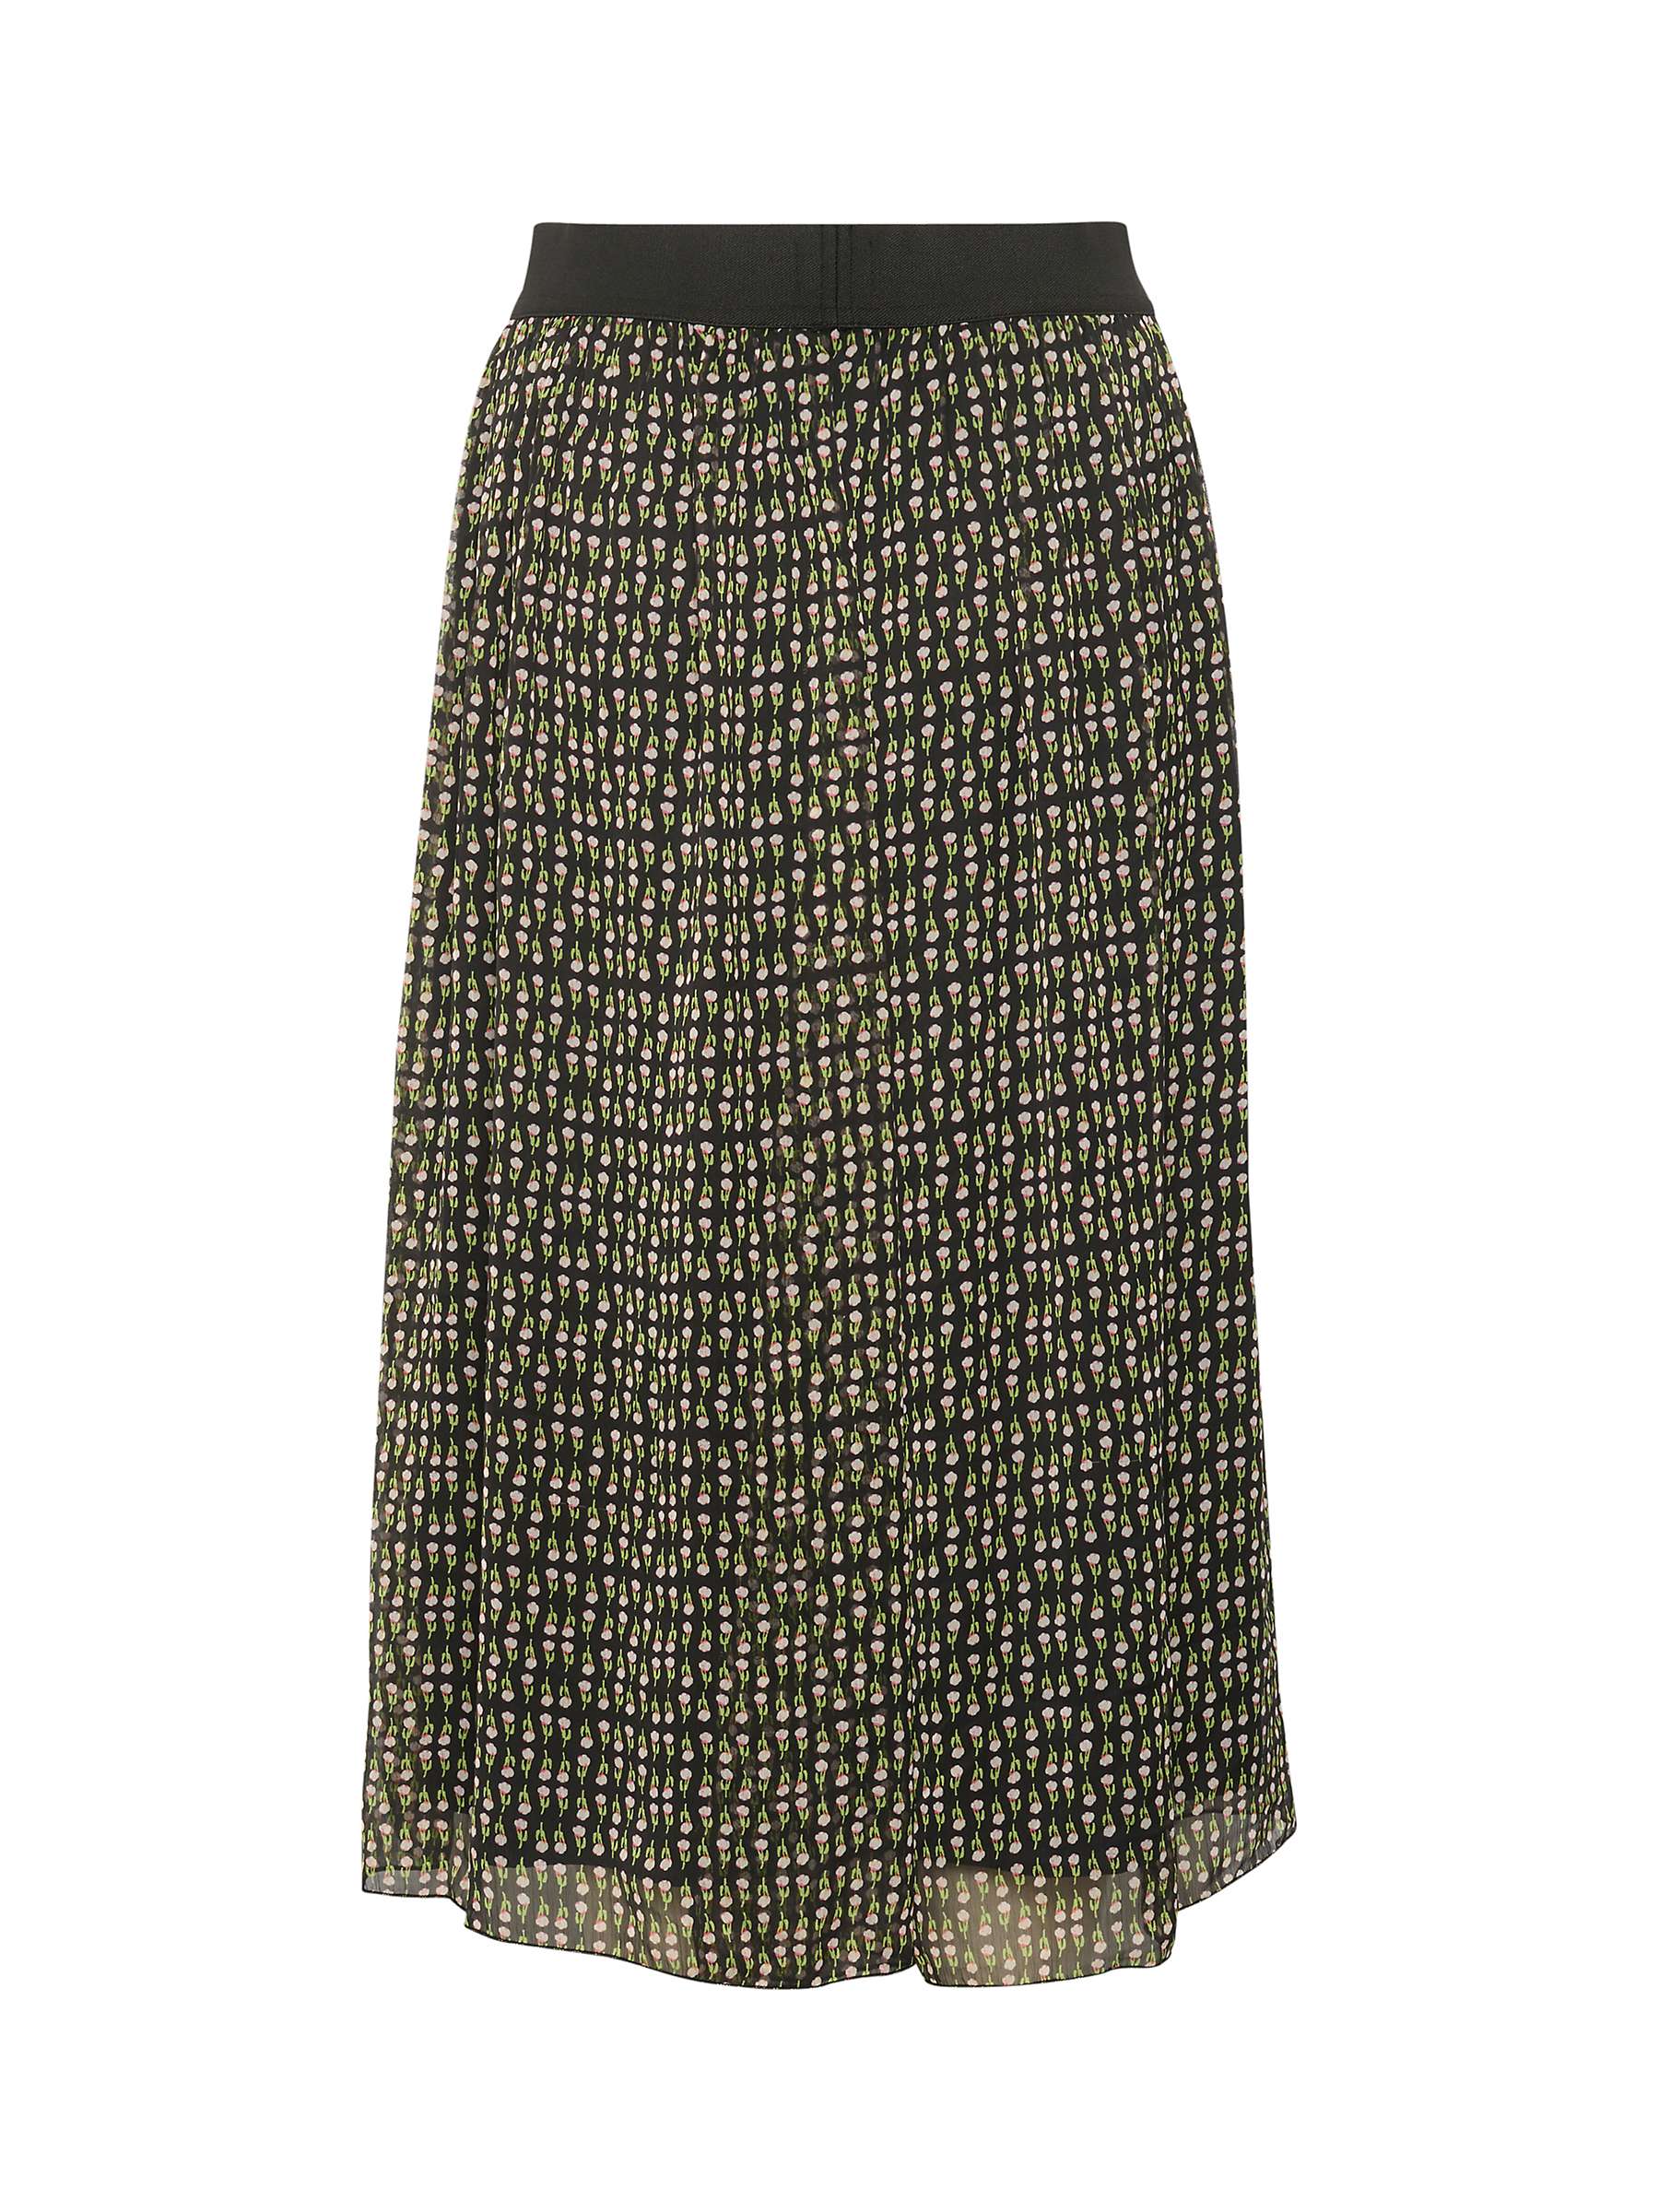 Buy Saint Tropez Toral Line Florals Print Midi Skirt, Black/Multi Online at johnlewis.com